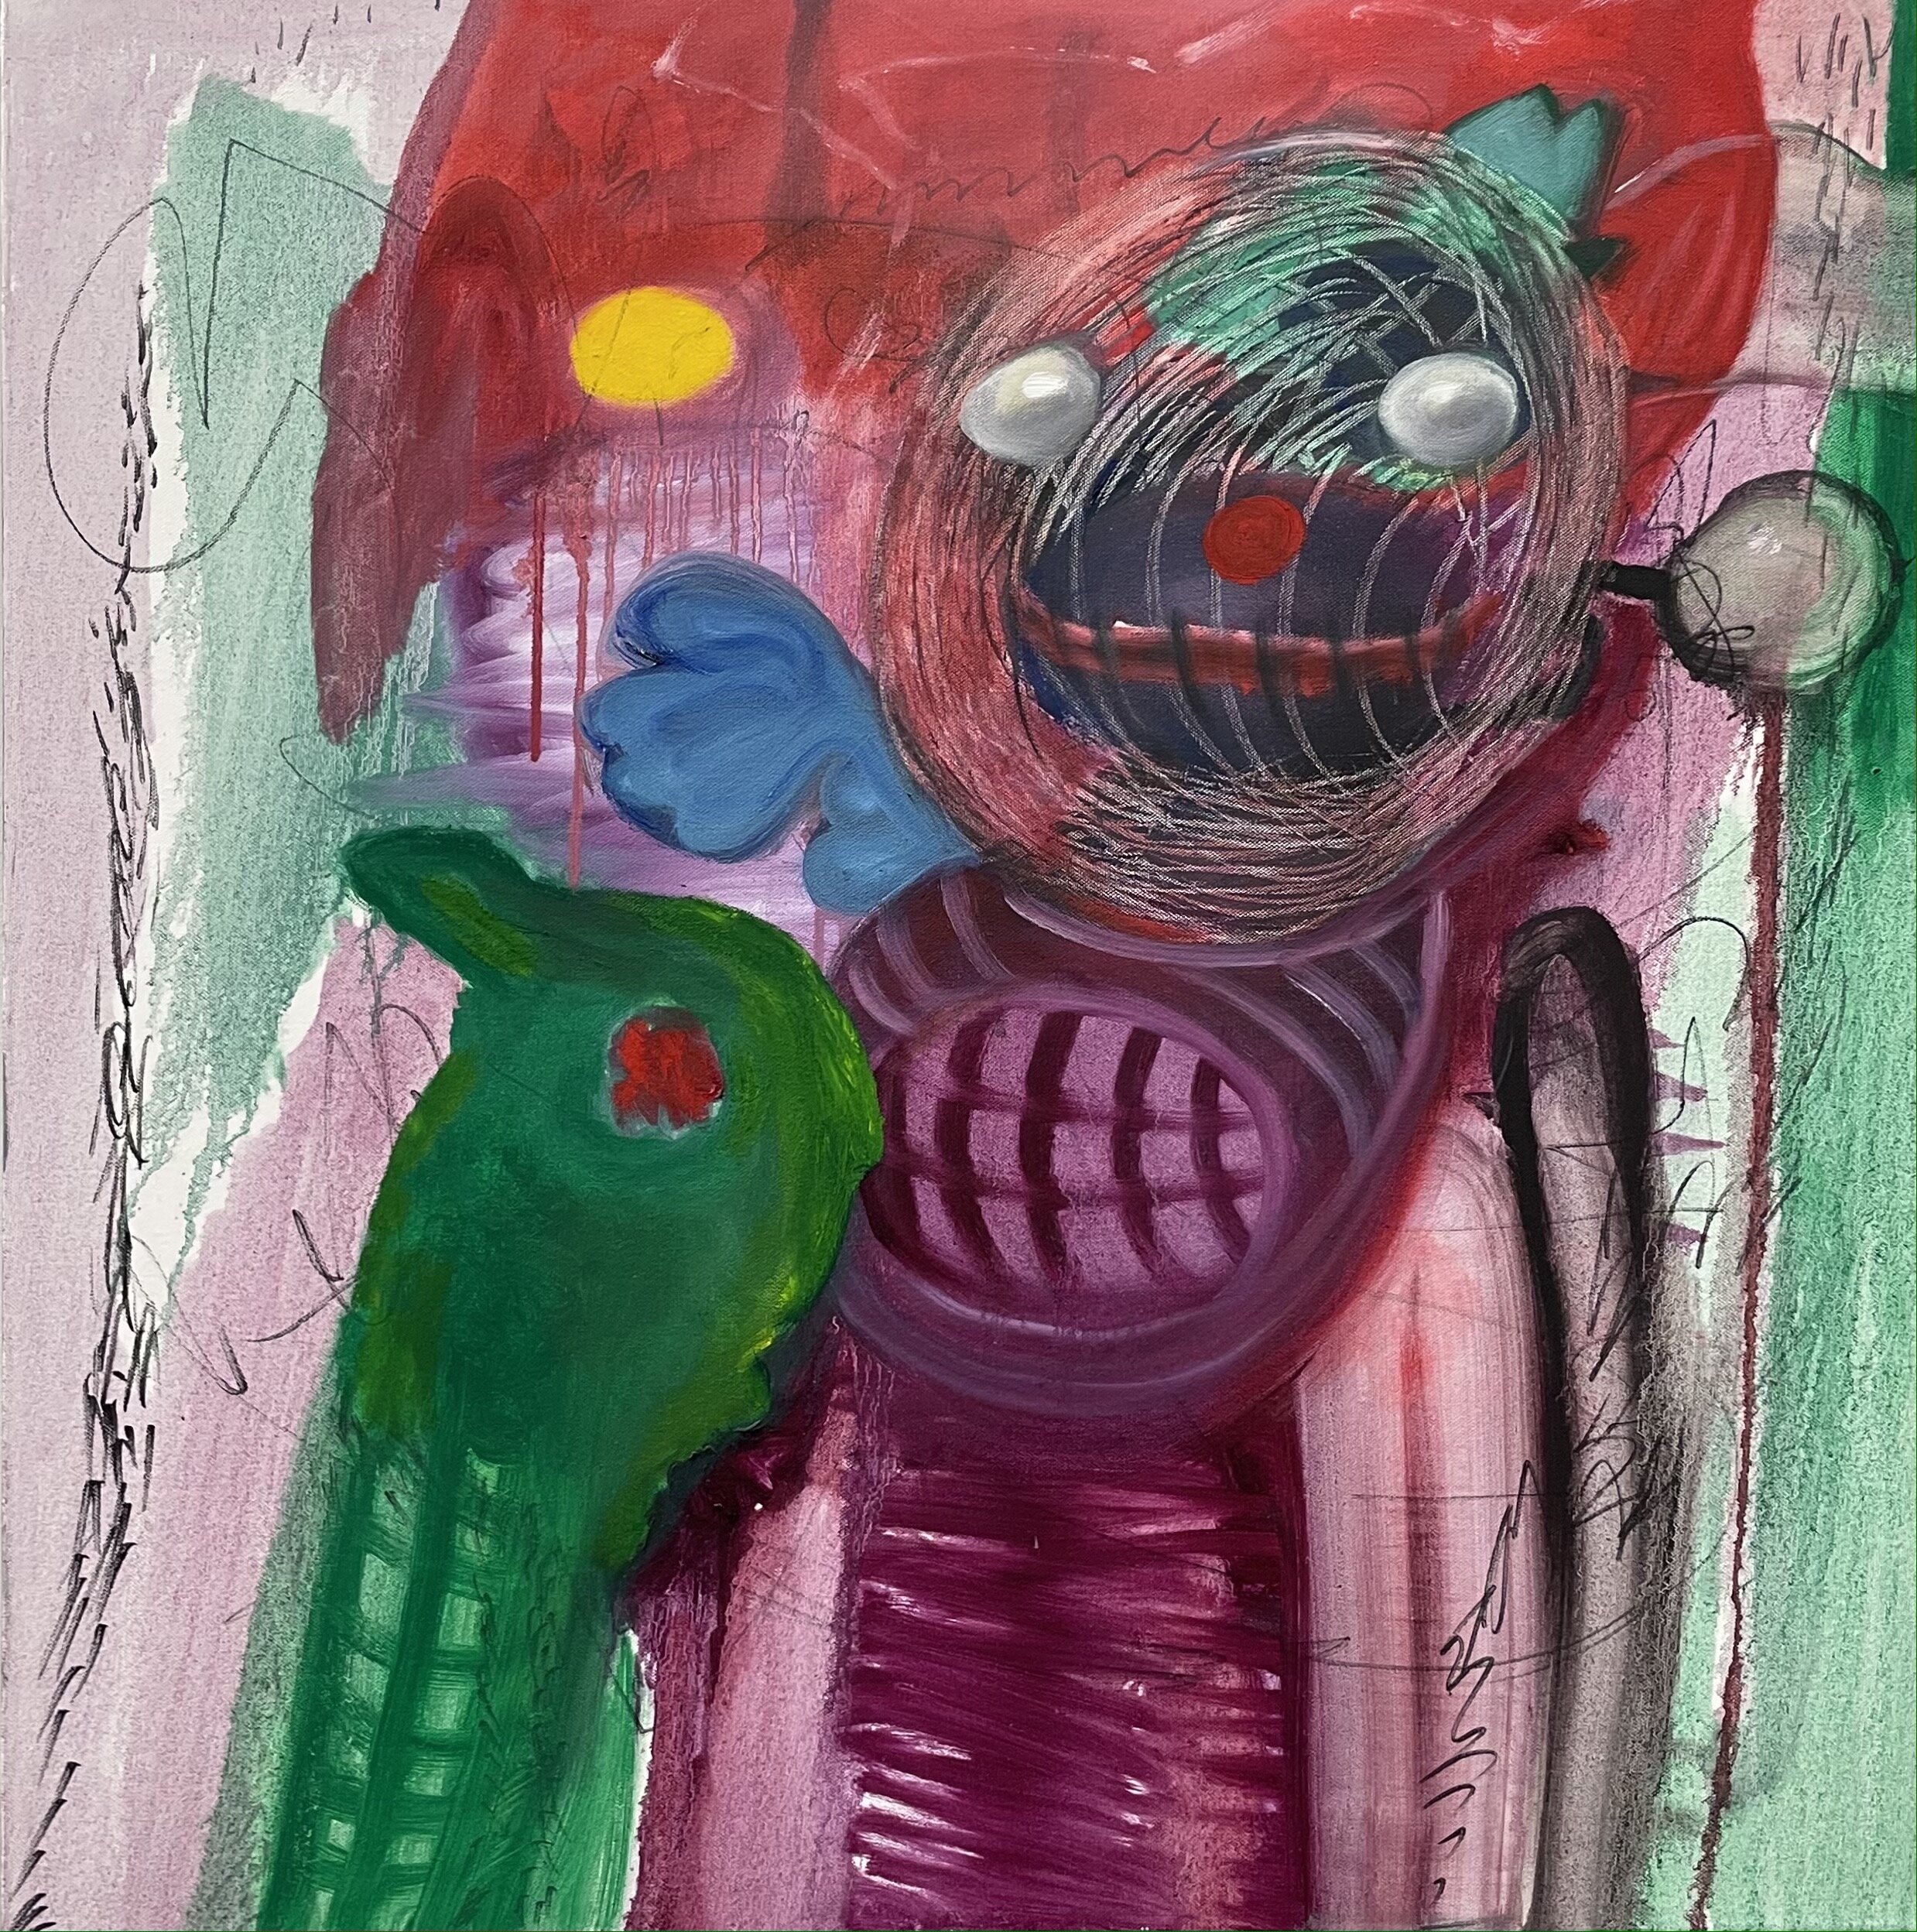 Green Rabbit, oil on canvas, 30"x30", 2020